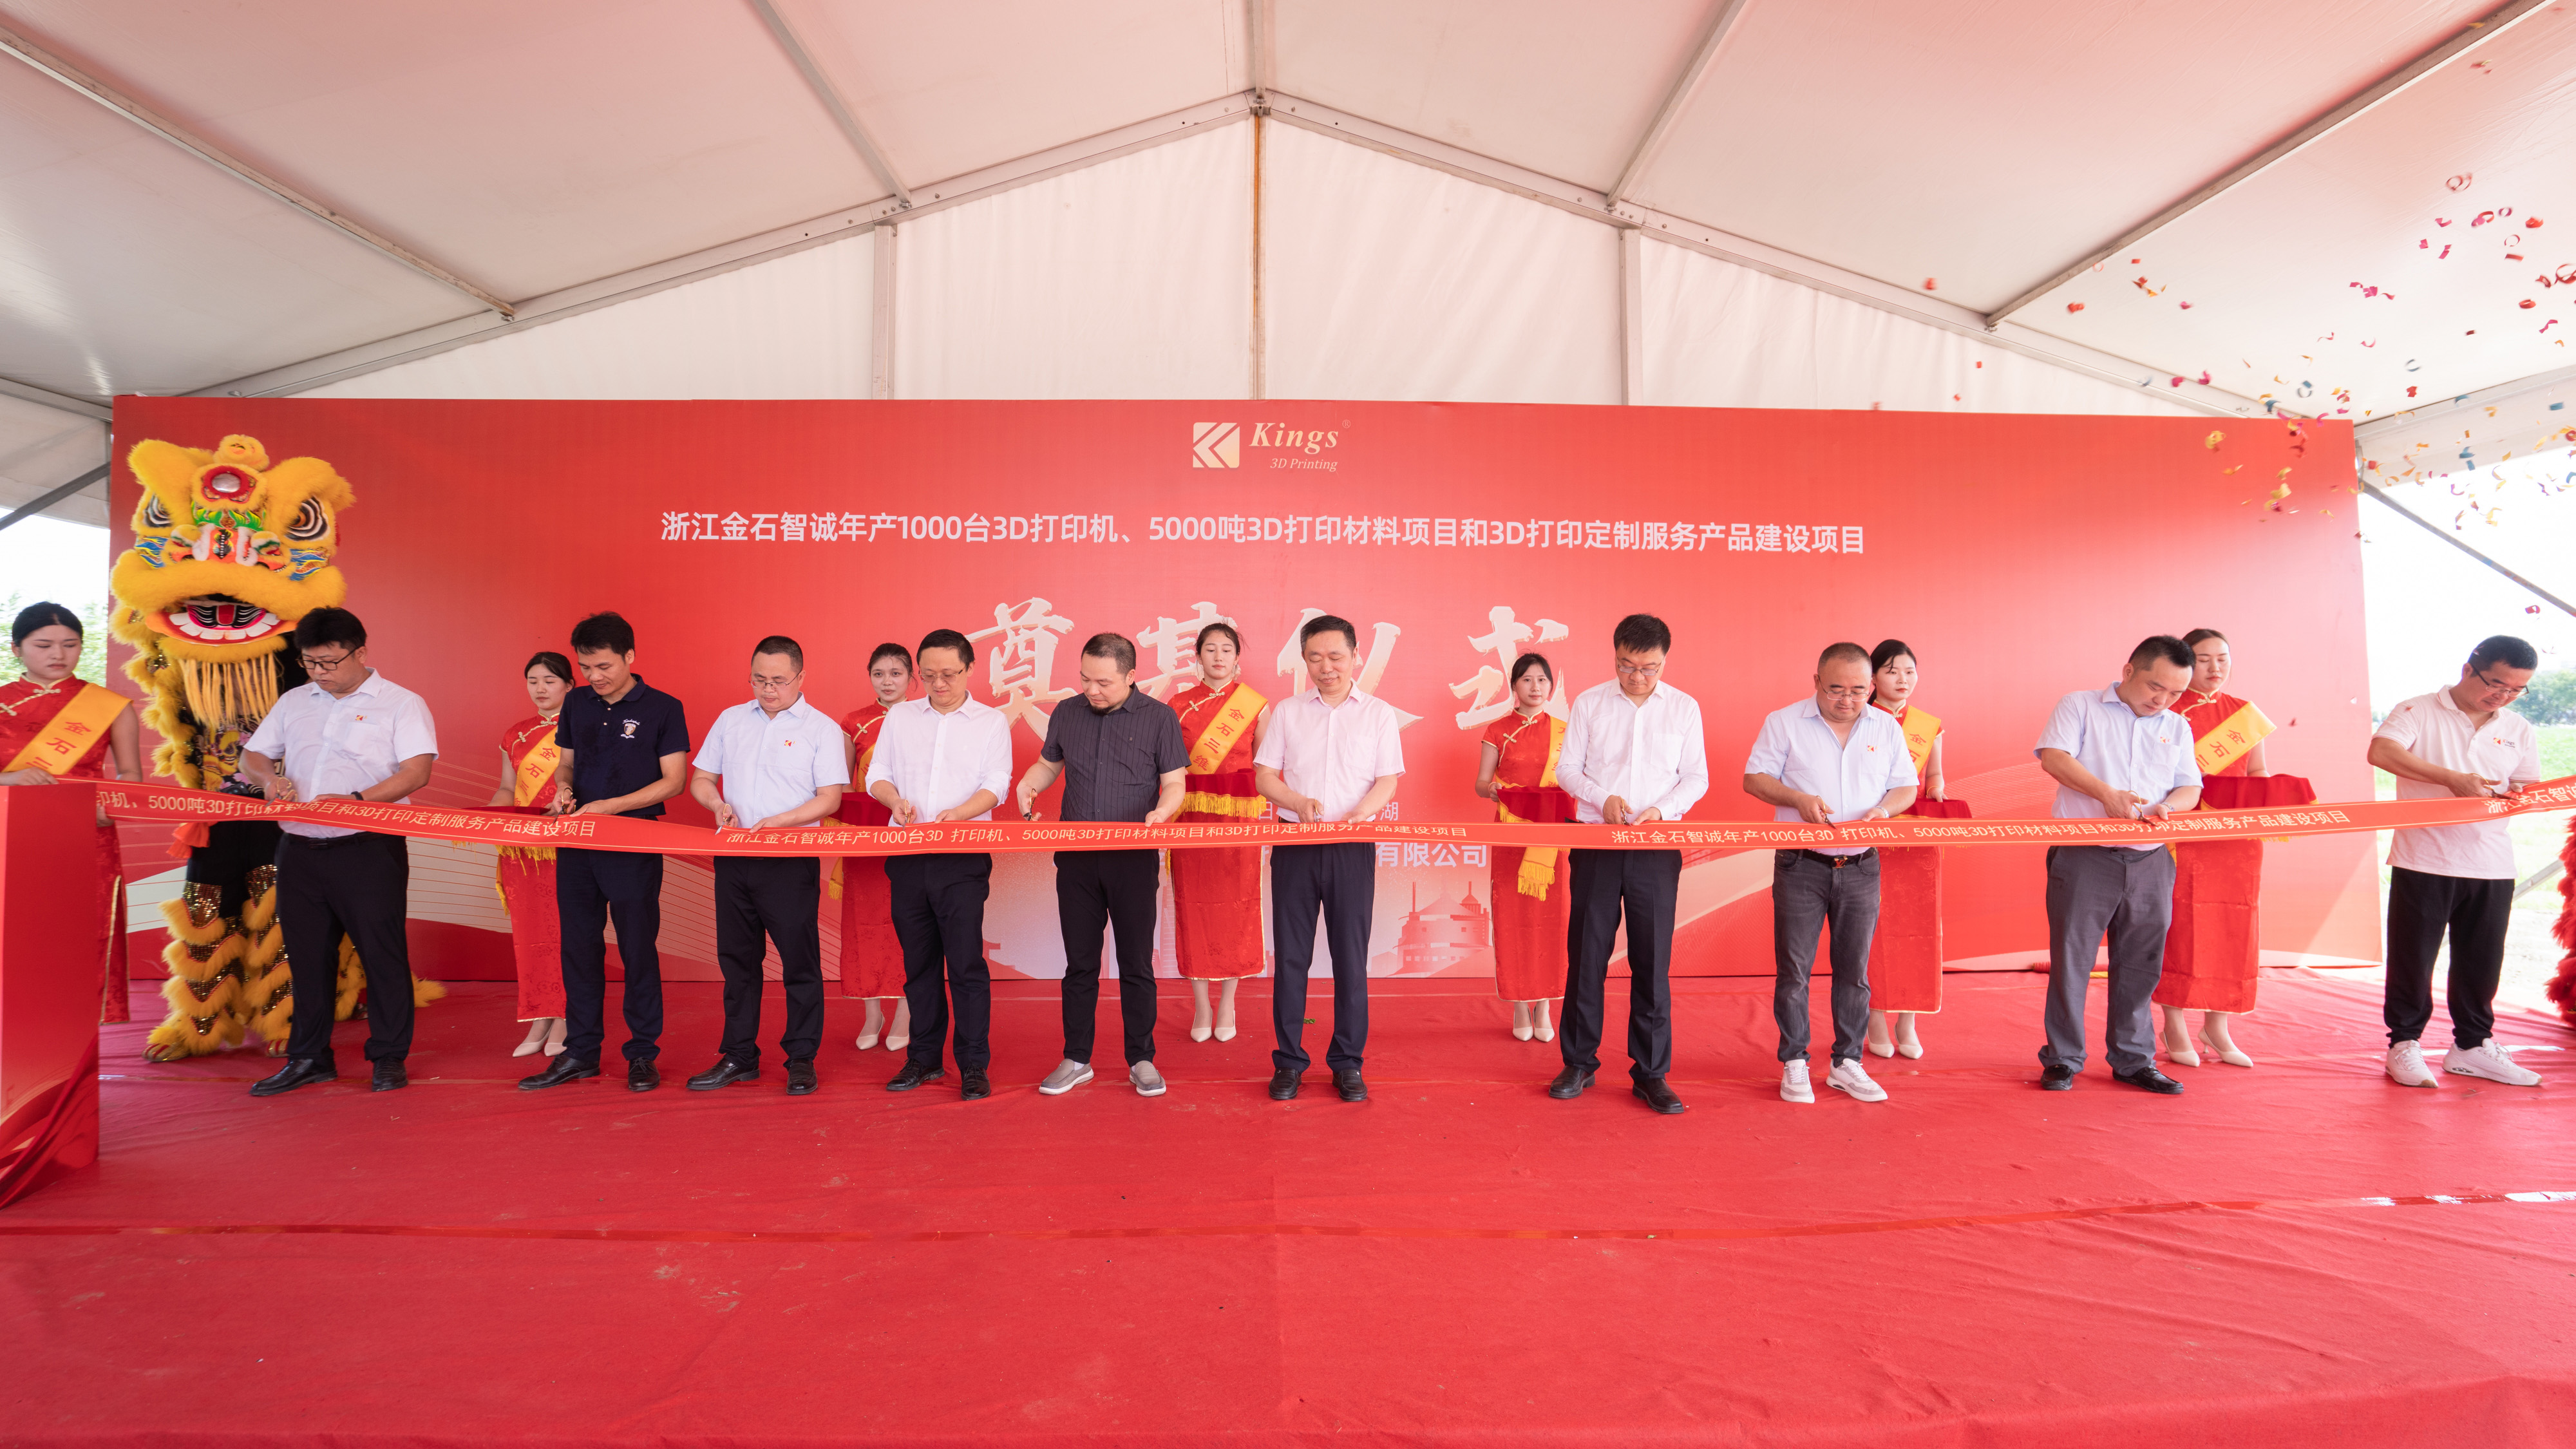 Groundbreaking Ceremony for Kings 3D Zhejiang - Zhicheng Intelligent Equipment Co., Ltd. Project